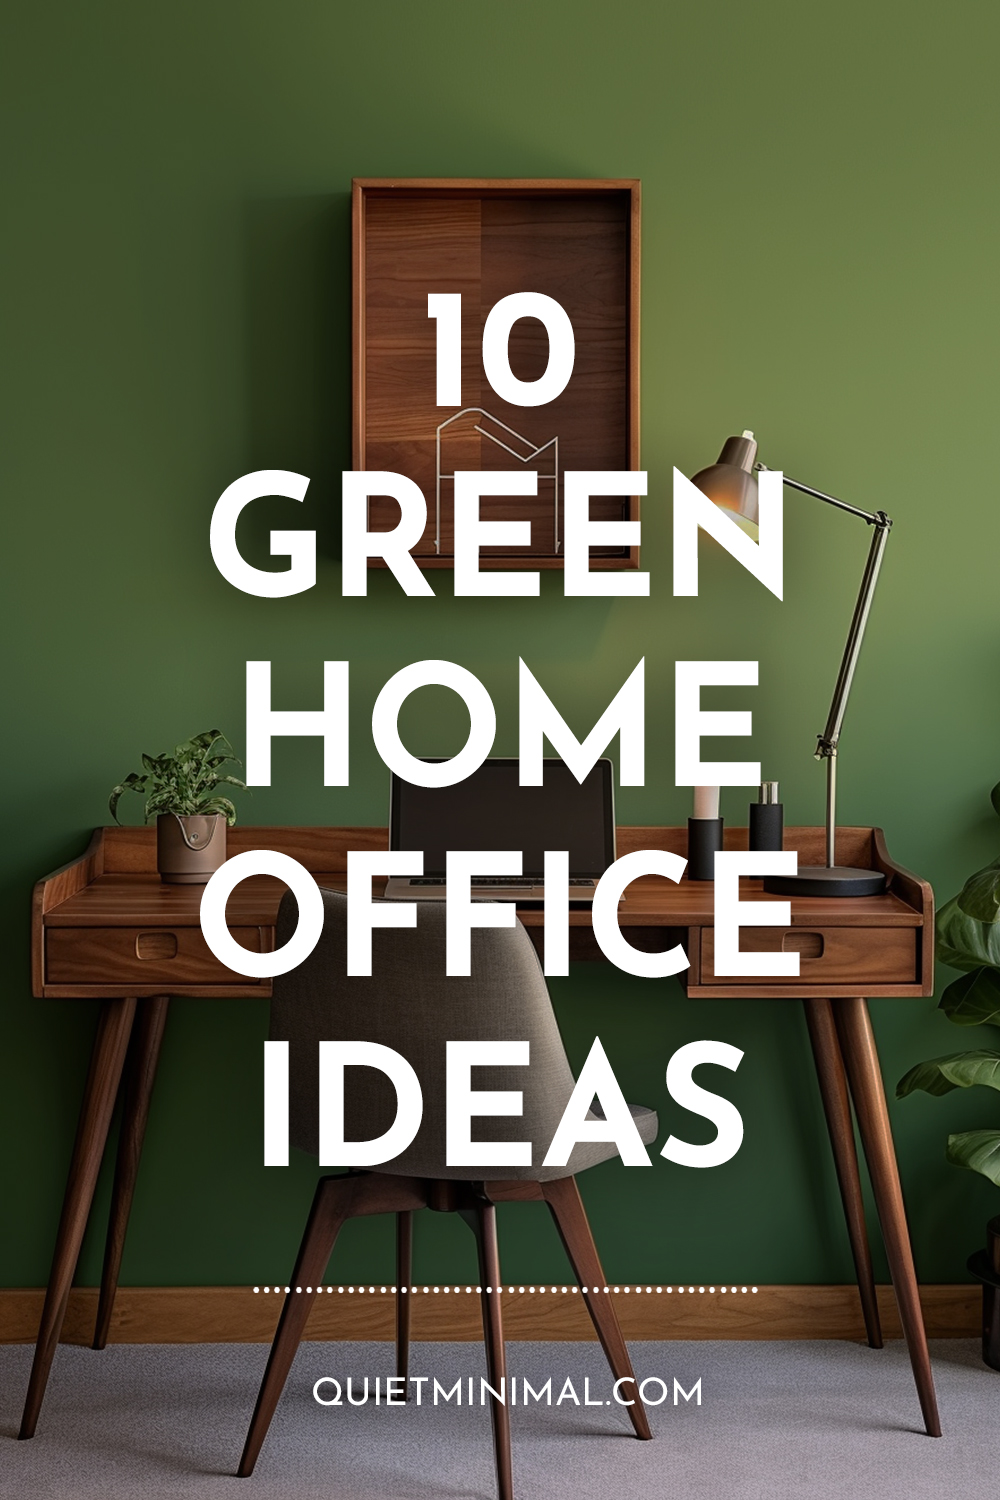 10 green home office ideas.